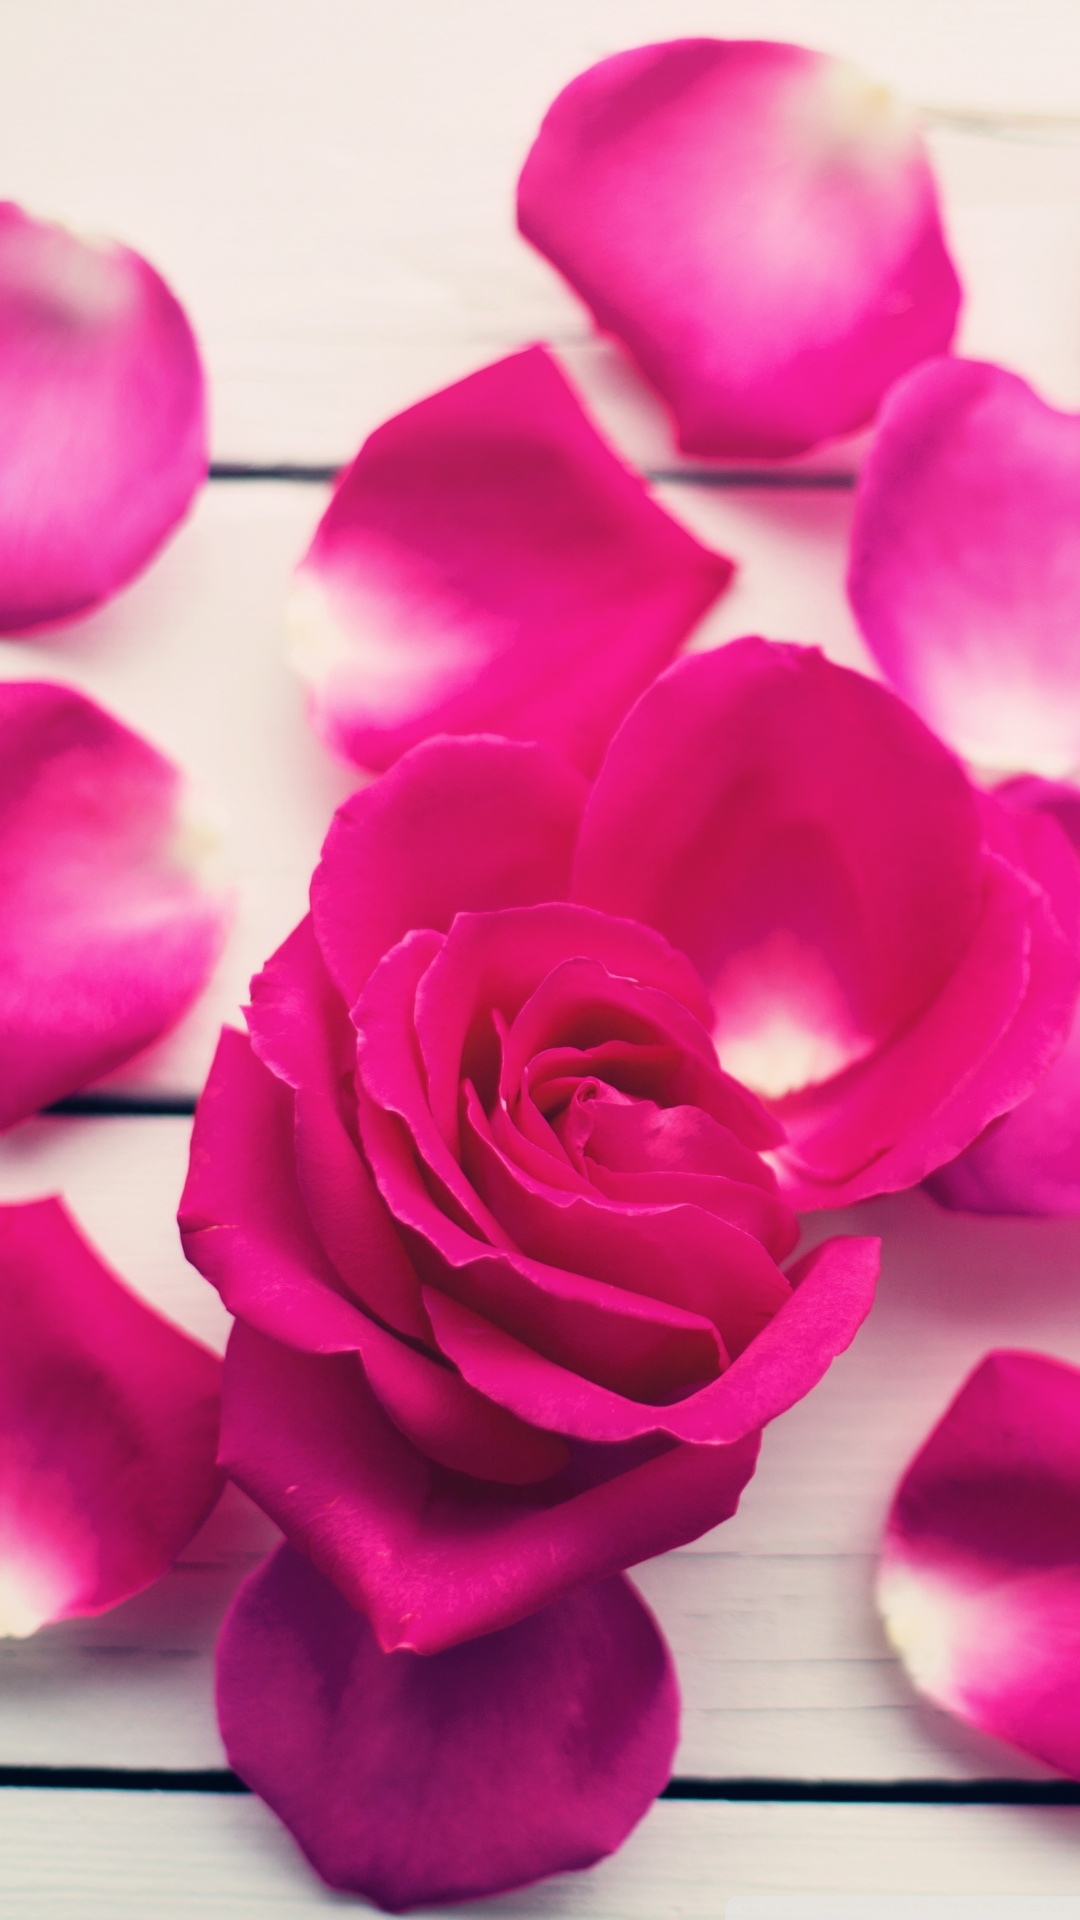 Rose Wallpaper pink rose petals wallpaper 1080x1920 - Supportive Guru